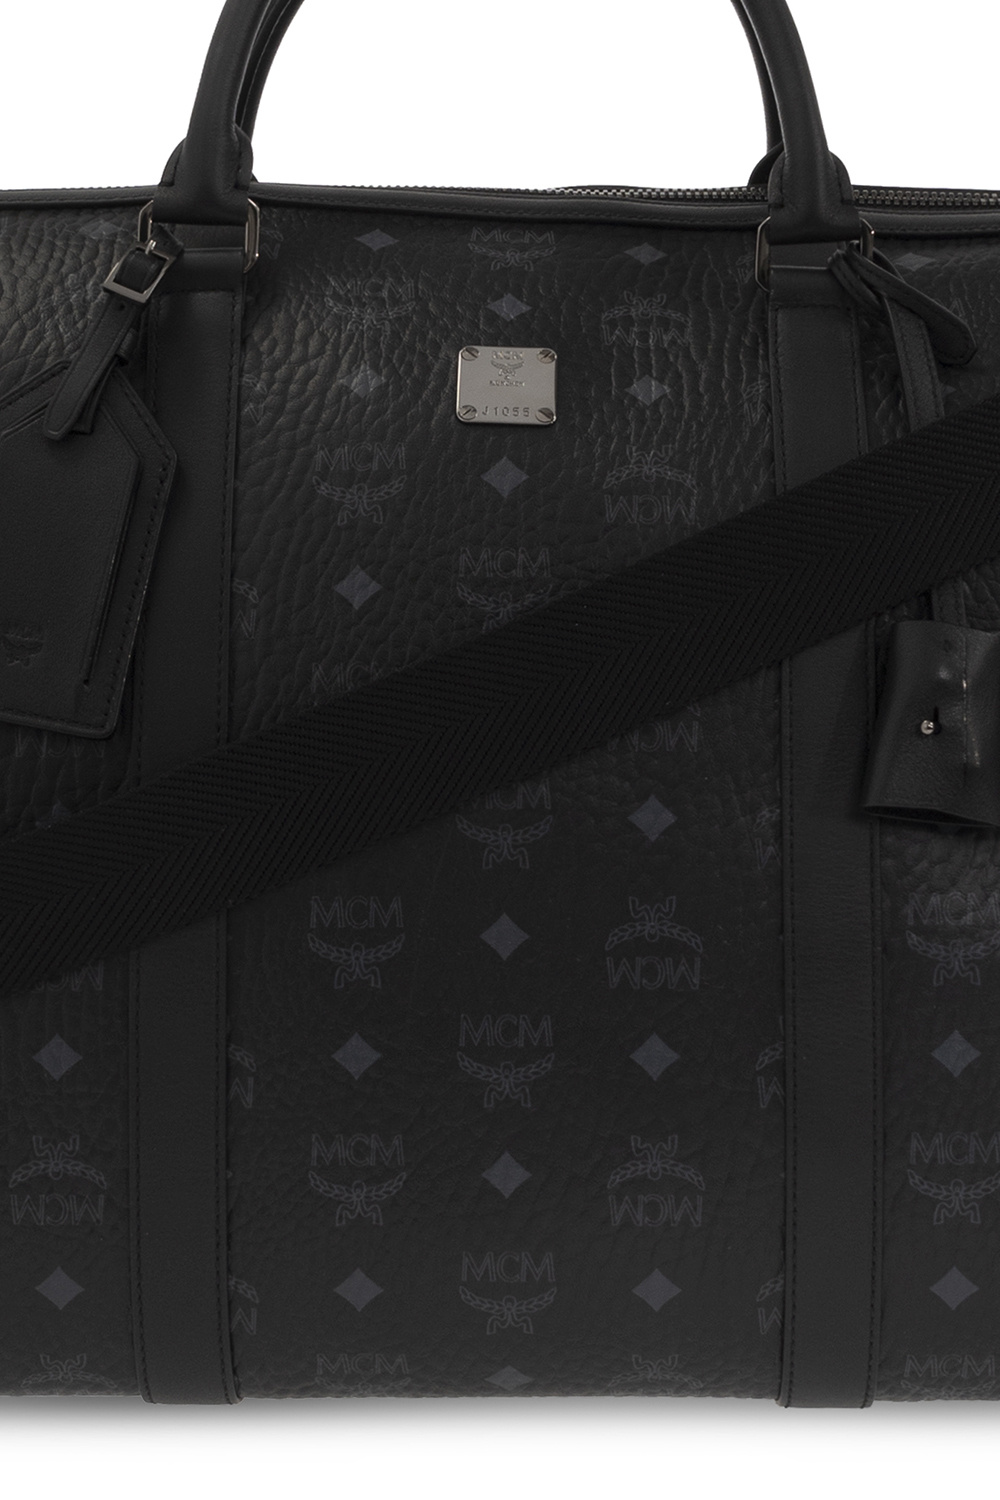 Louis Vuitton Bag in black epi leather - Black 'Weekender' duffel